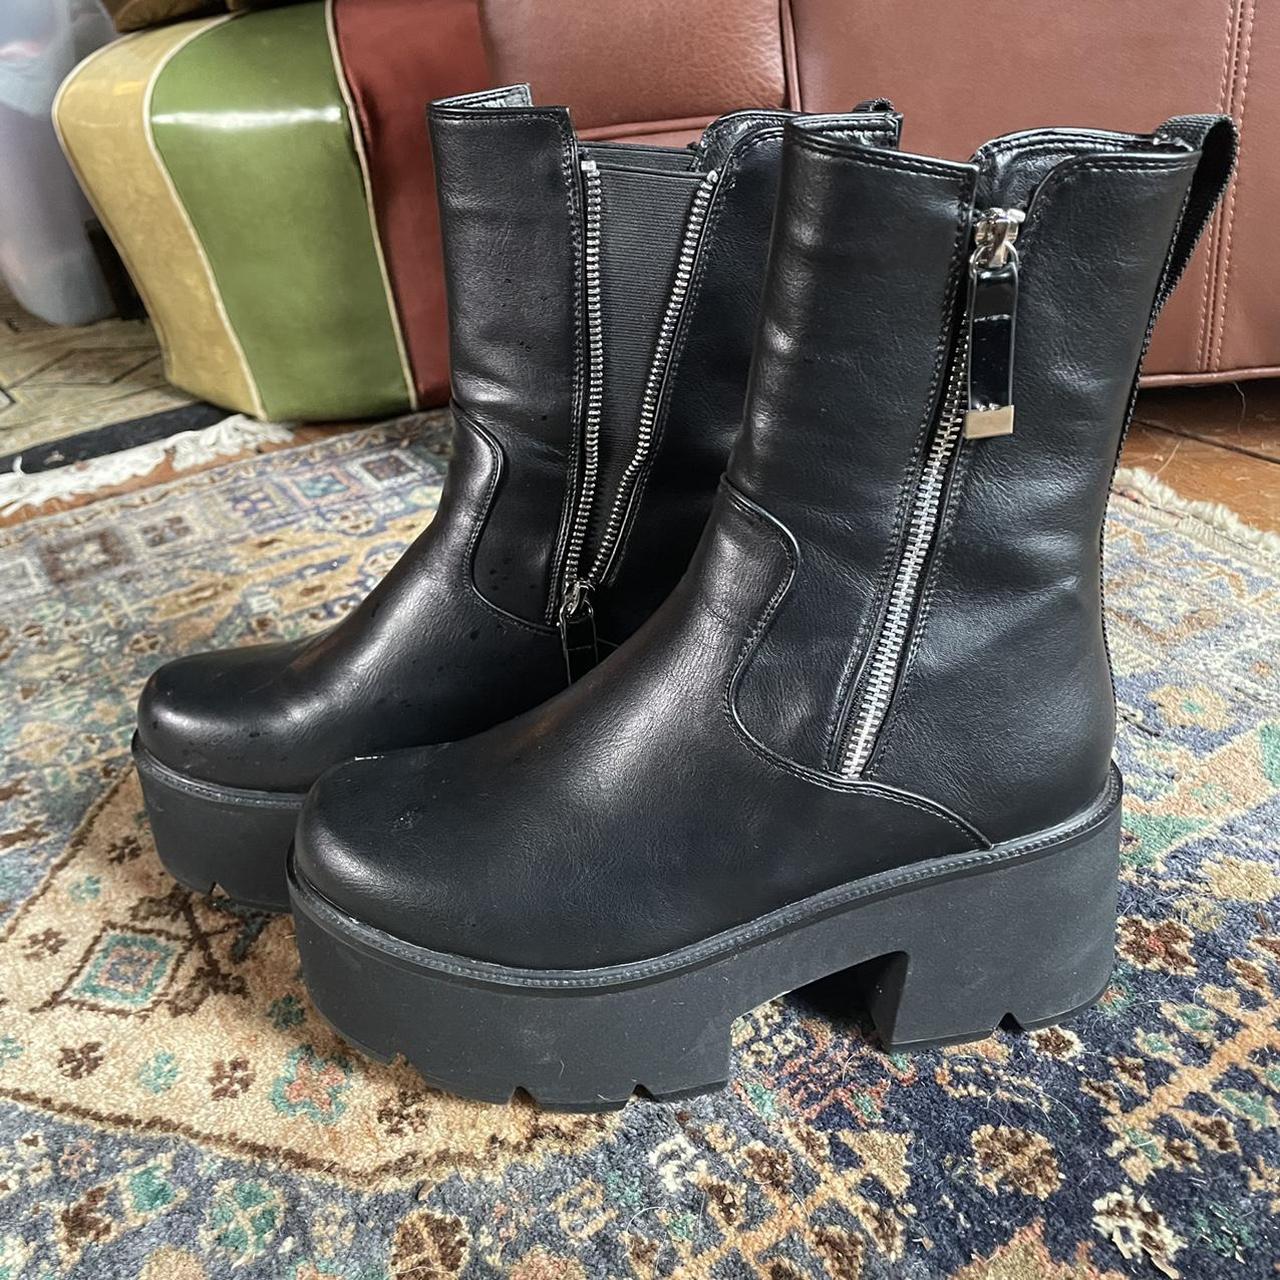 Product Image 2 - Stunning Lamoda black platform boots!